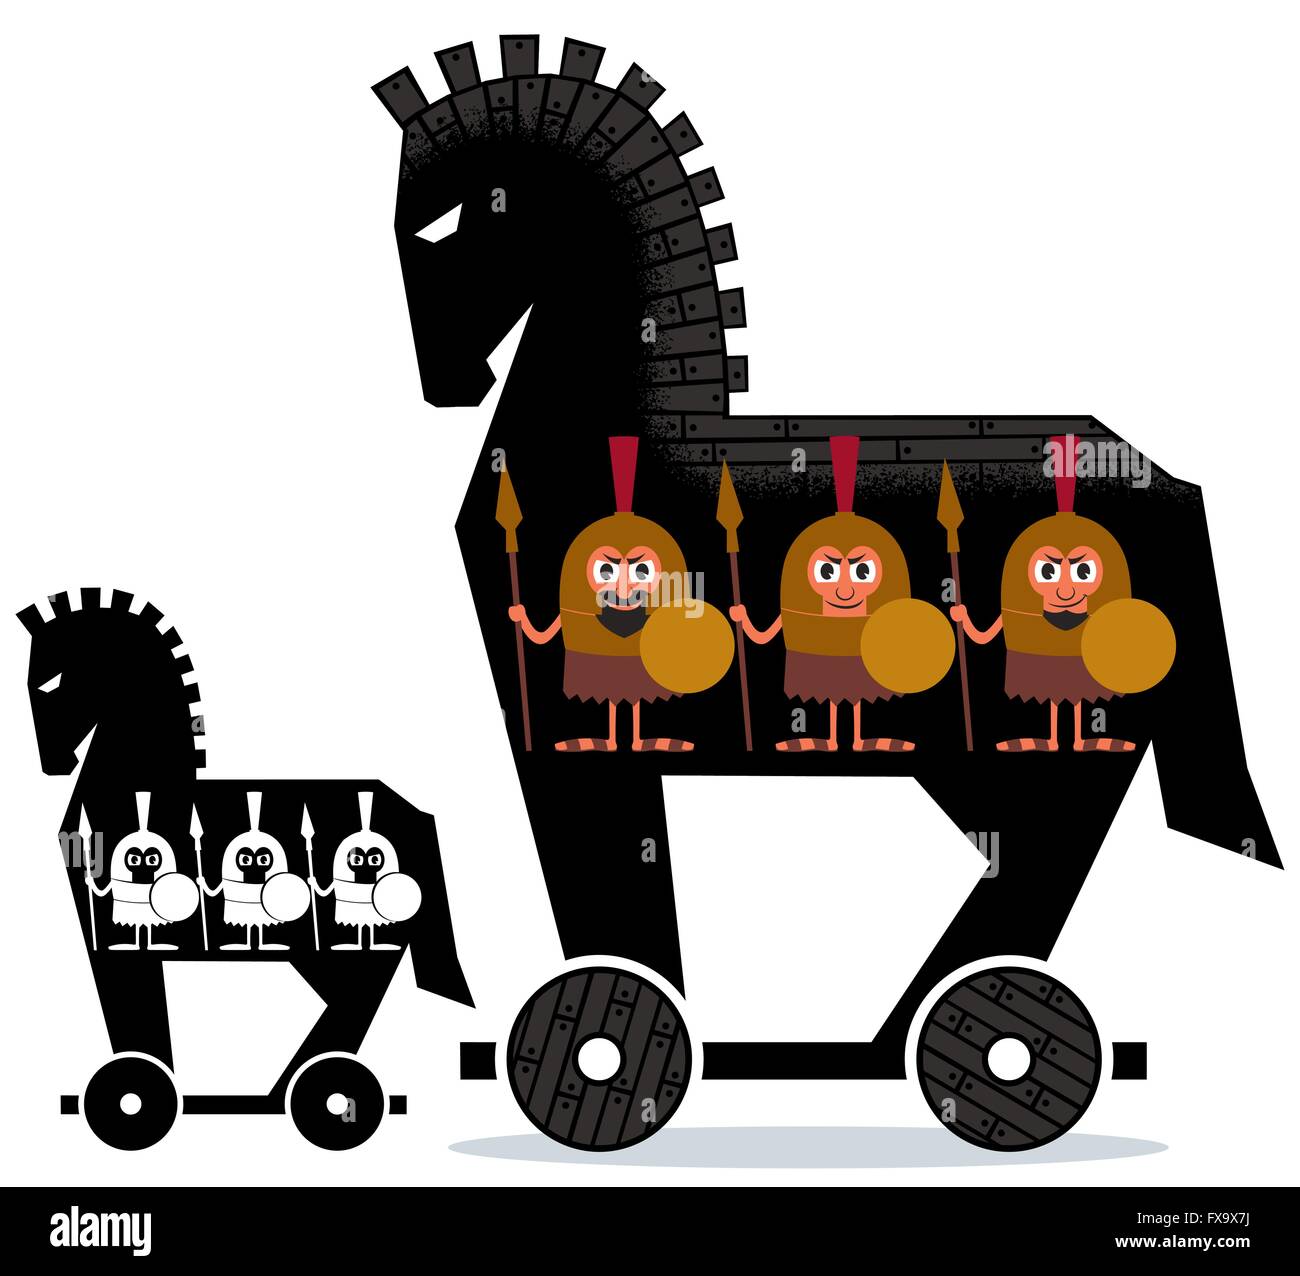 Cartoon Trojan horse with Greek soldiers in it in 2 versions. Stock Vector